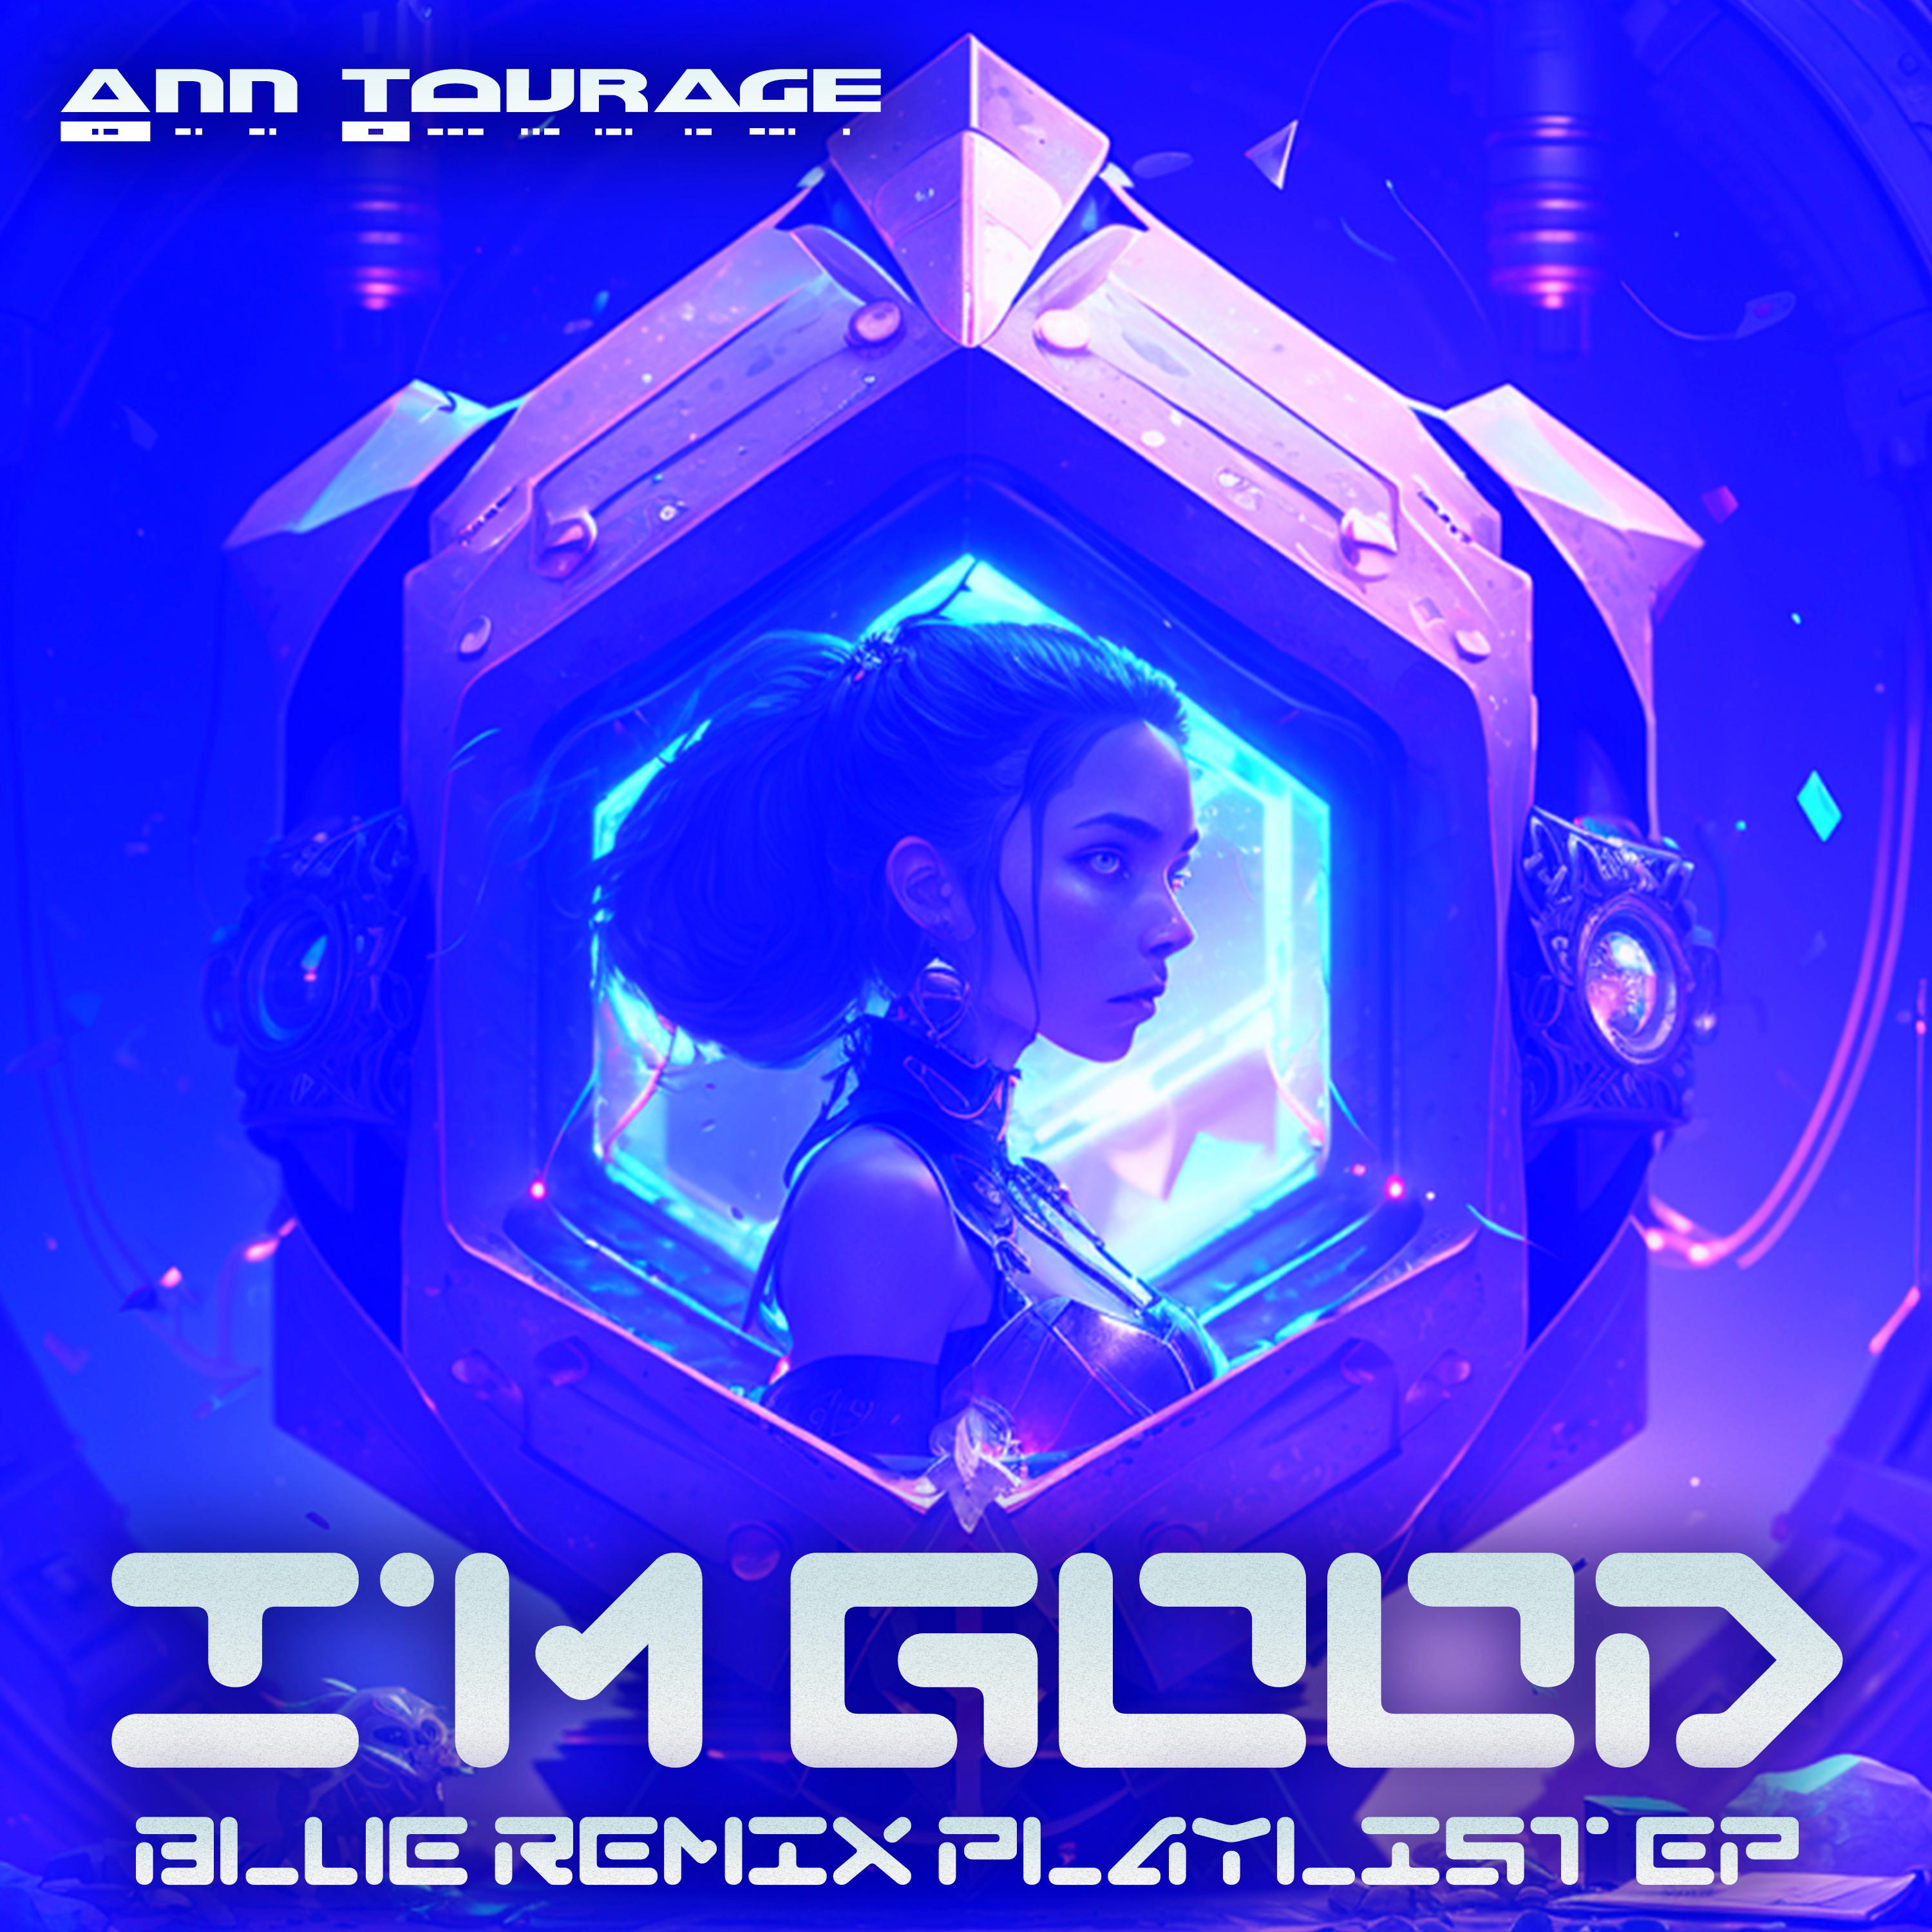 Ann Tourage - I'm Good (Iker Sadaba 80s Hits Remix Extended)